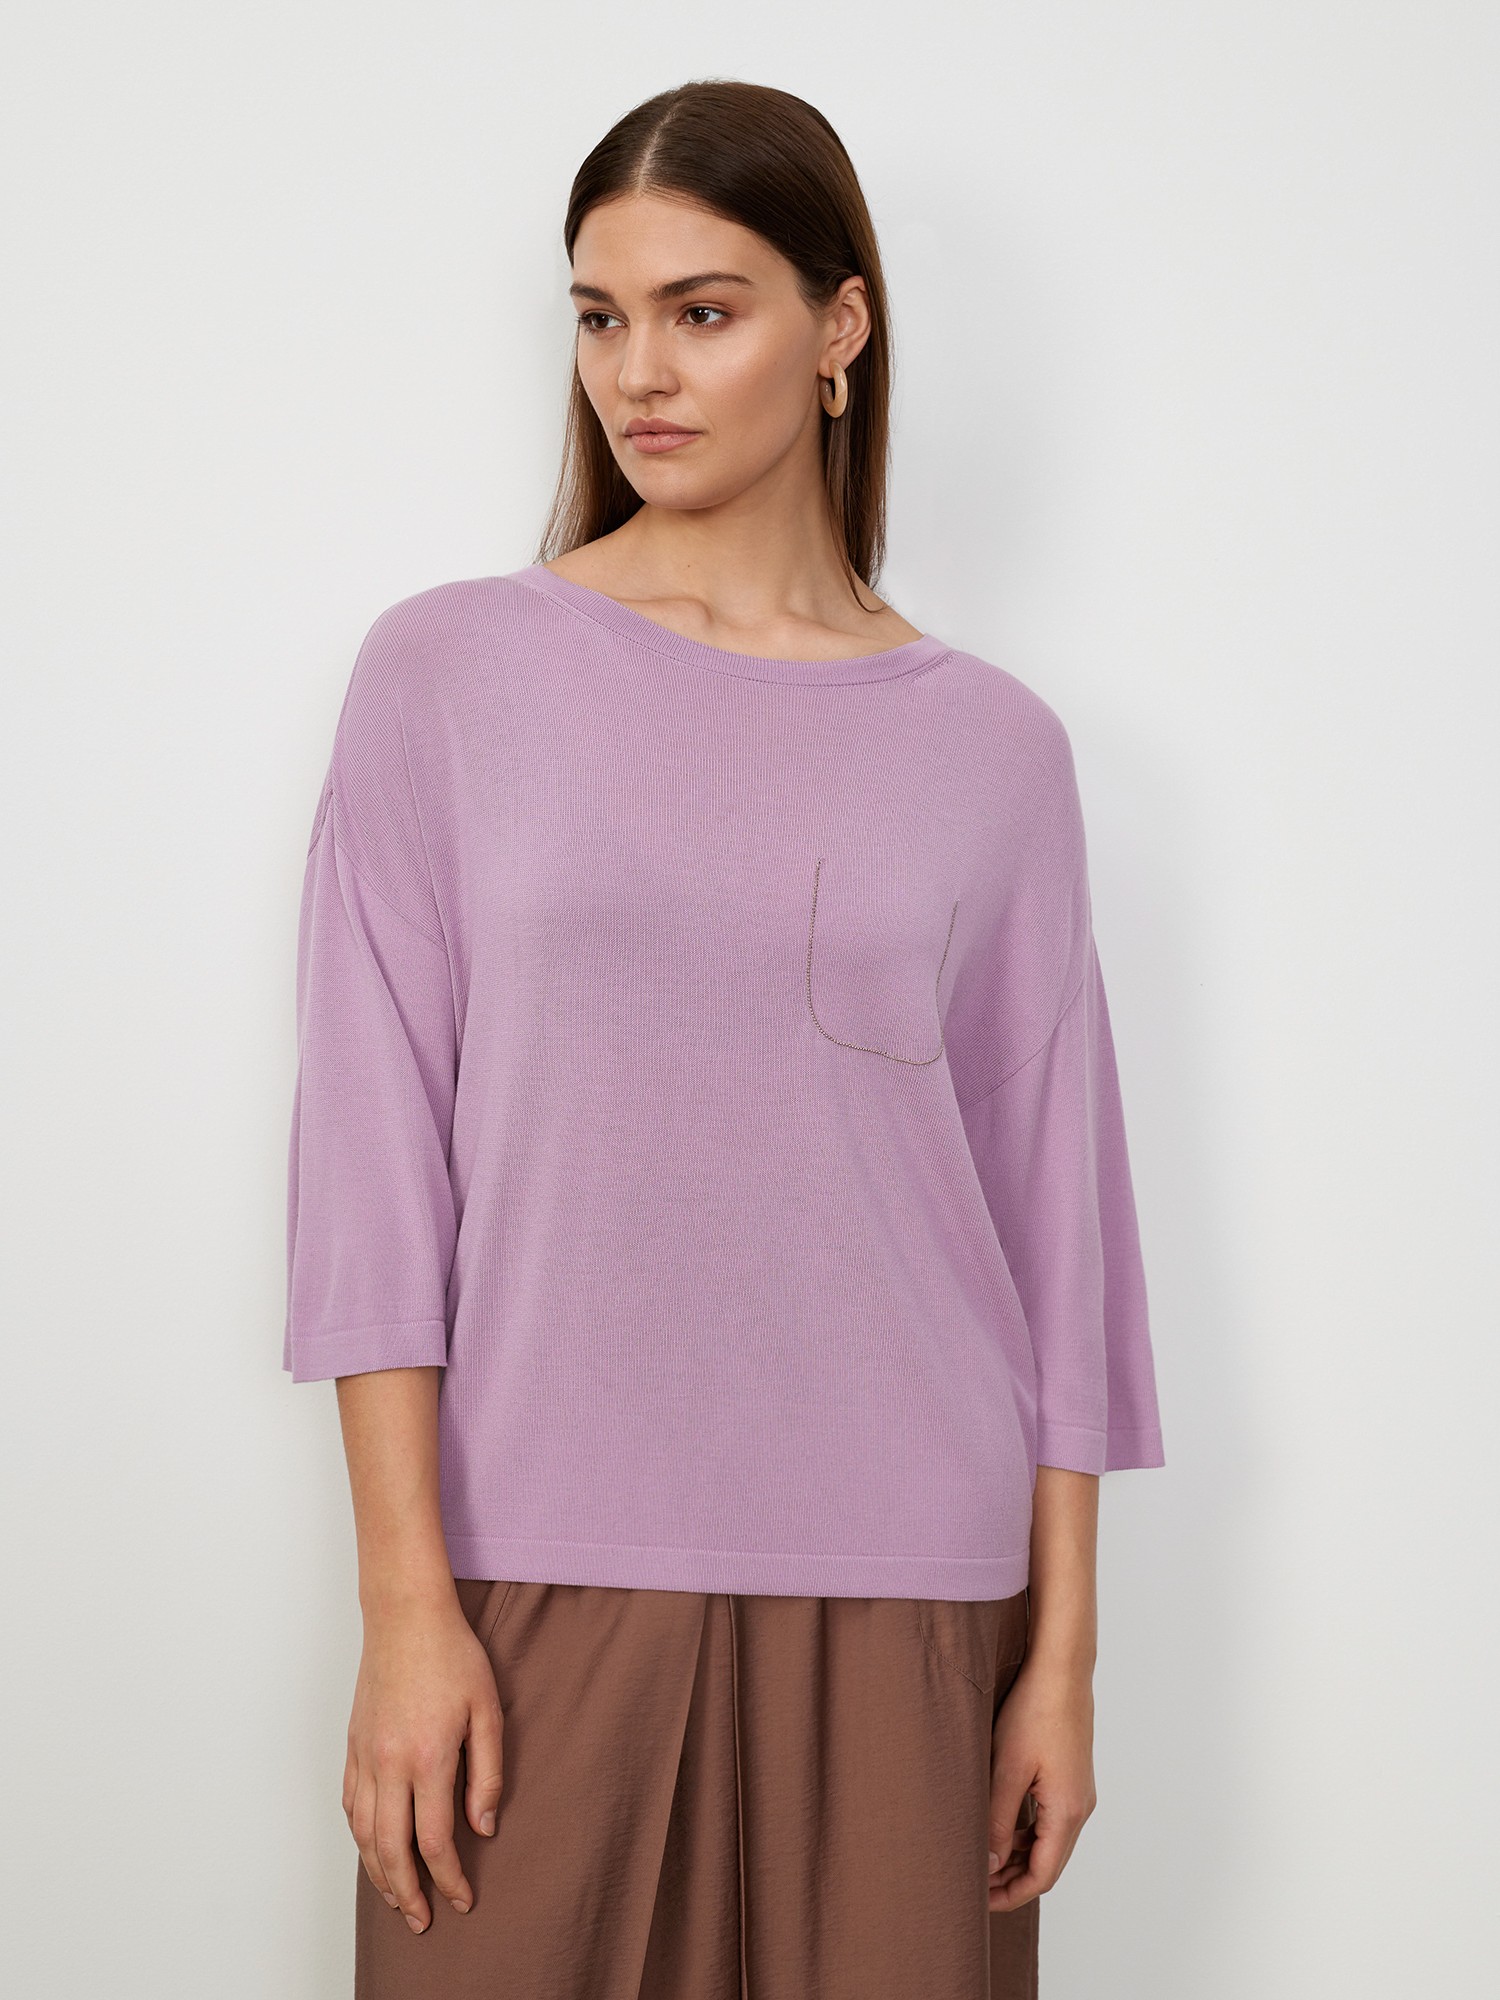 Блуза вязаная с монилью Lalis BL1069V, цвет фиолетовый, размер 56 - фото 1